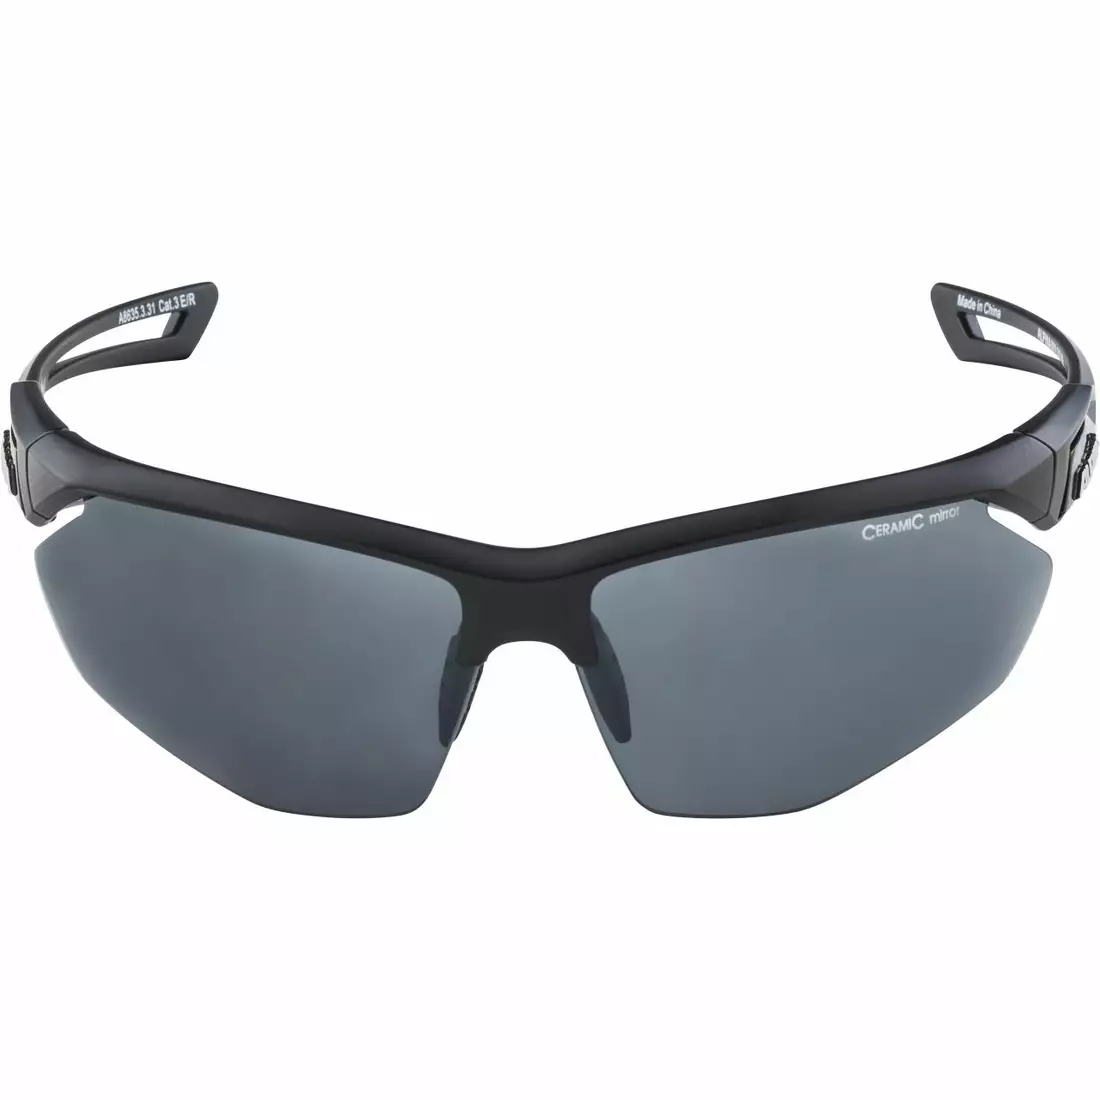 ALPINA Sportbrillen nylos HR black matt A8635331